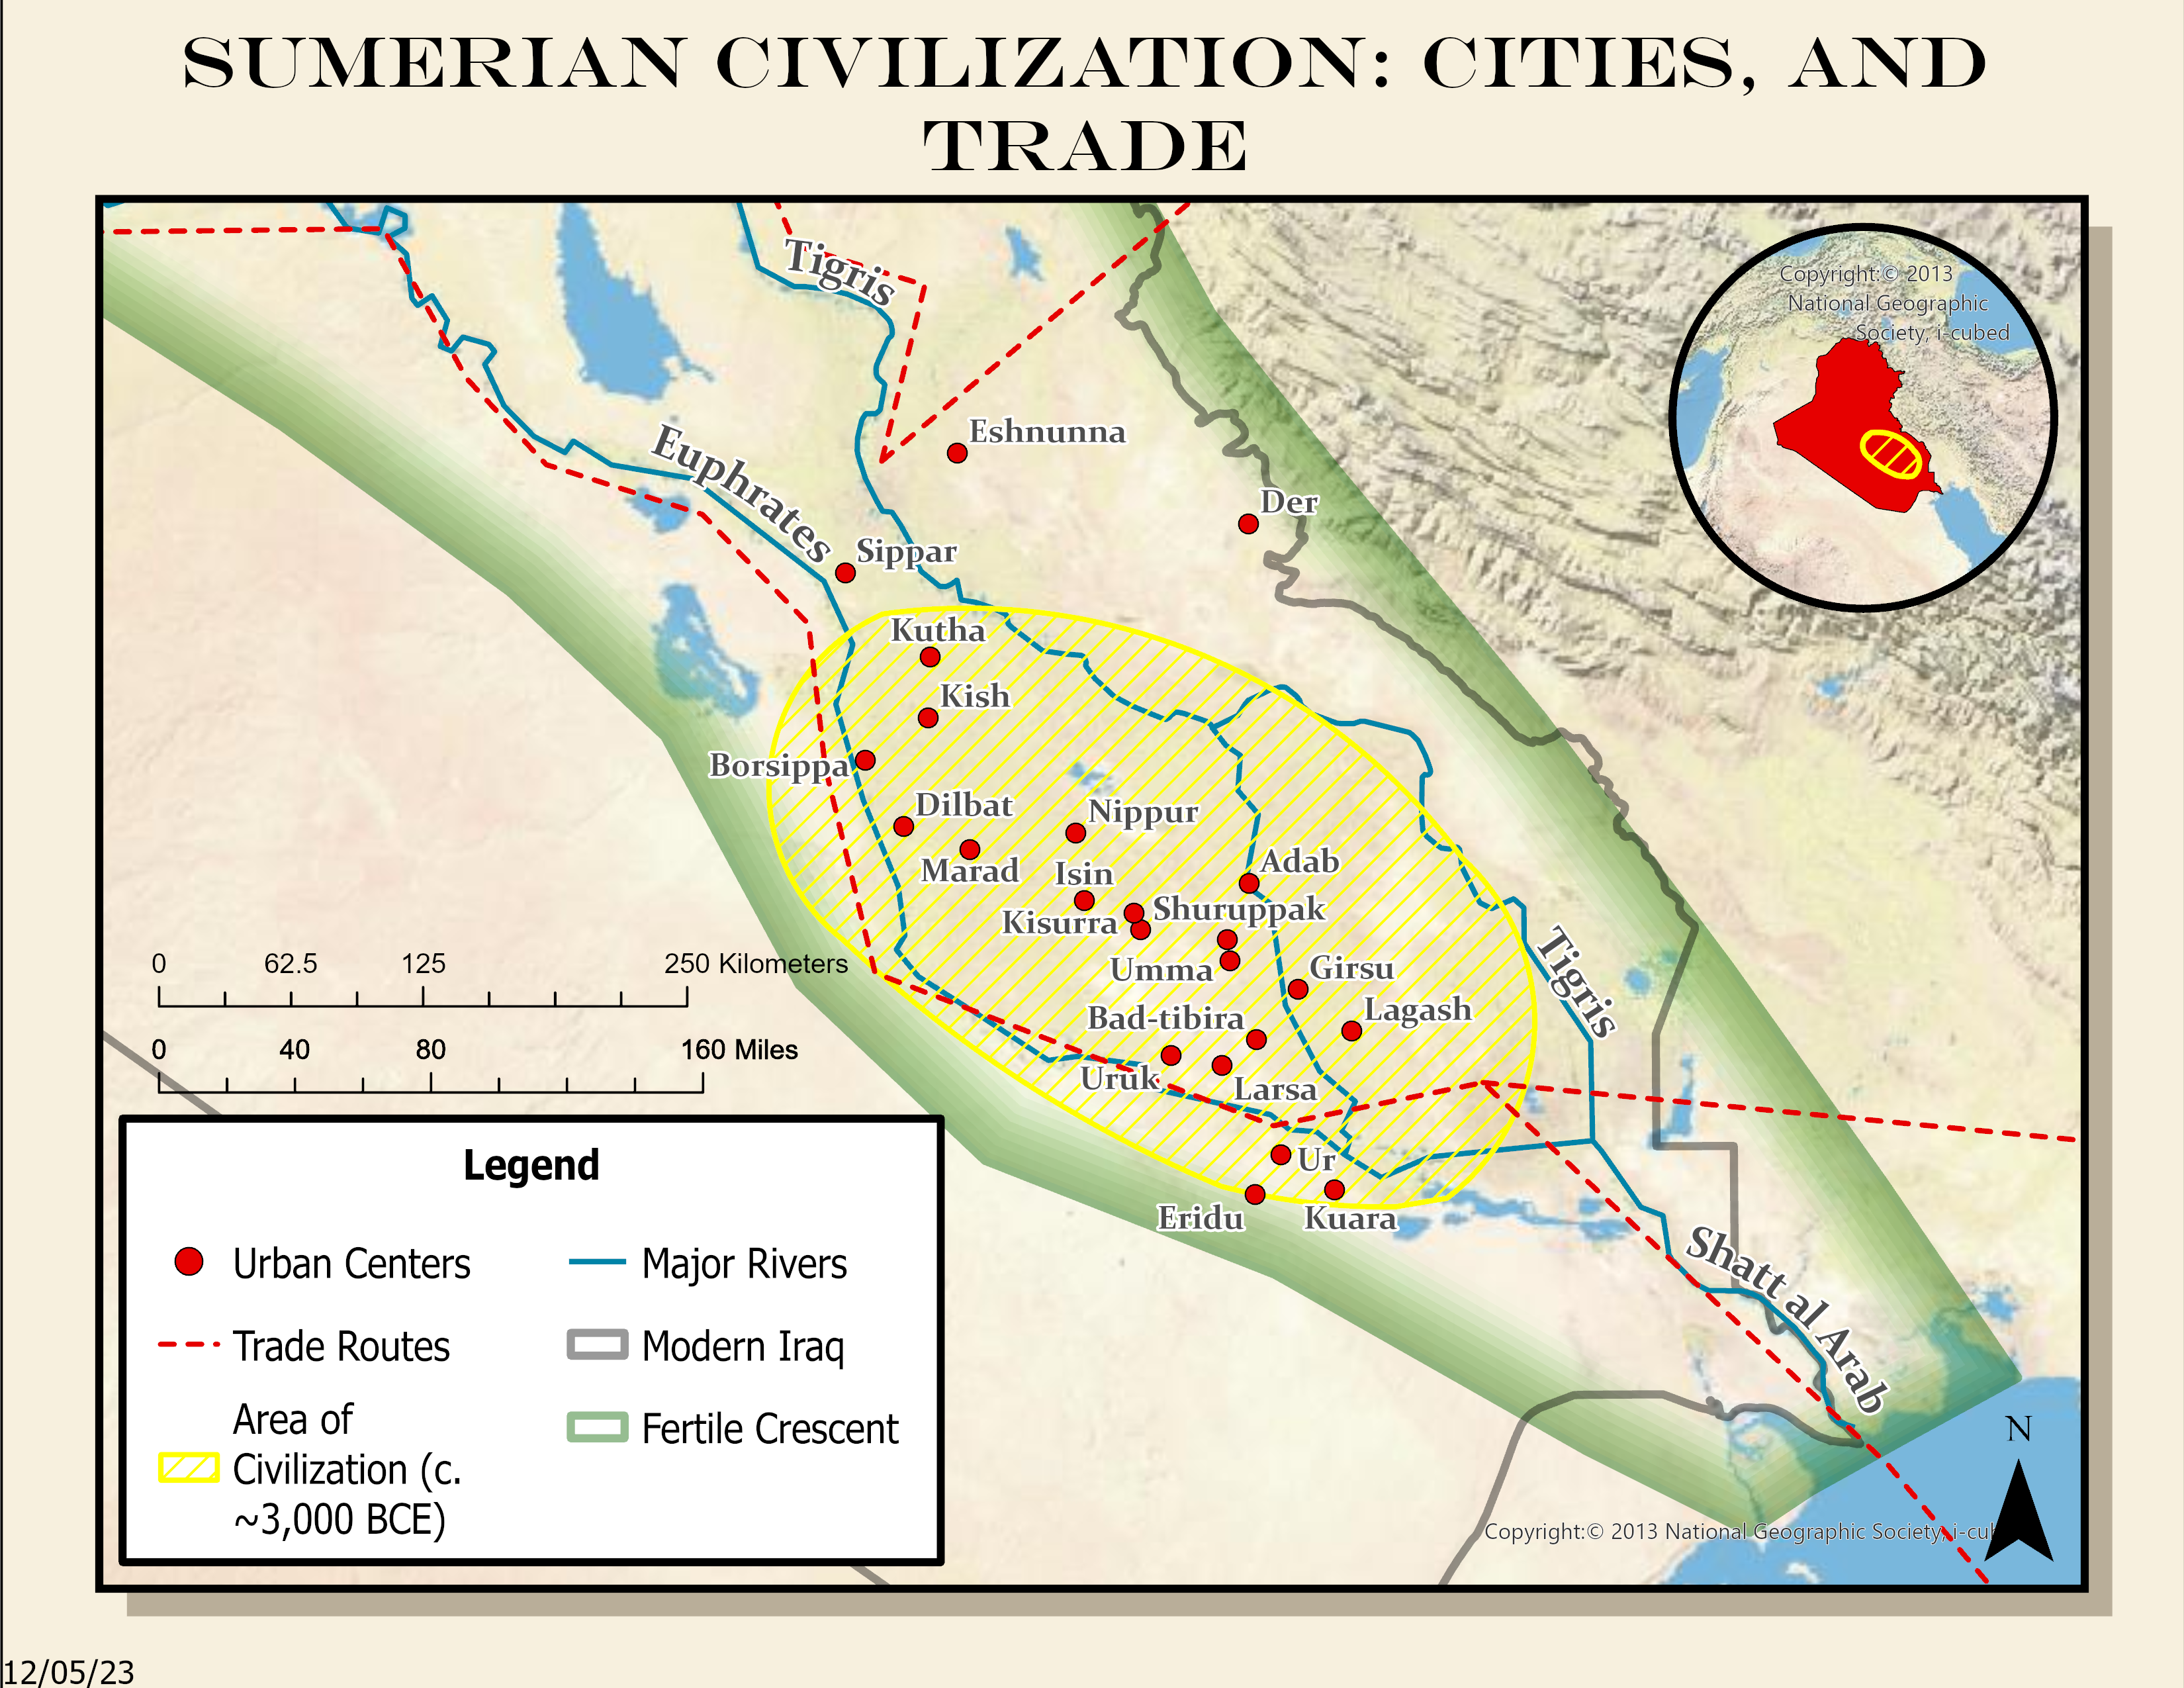 Sumerian Civilization: Cities and Trade